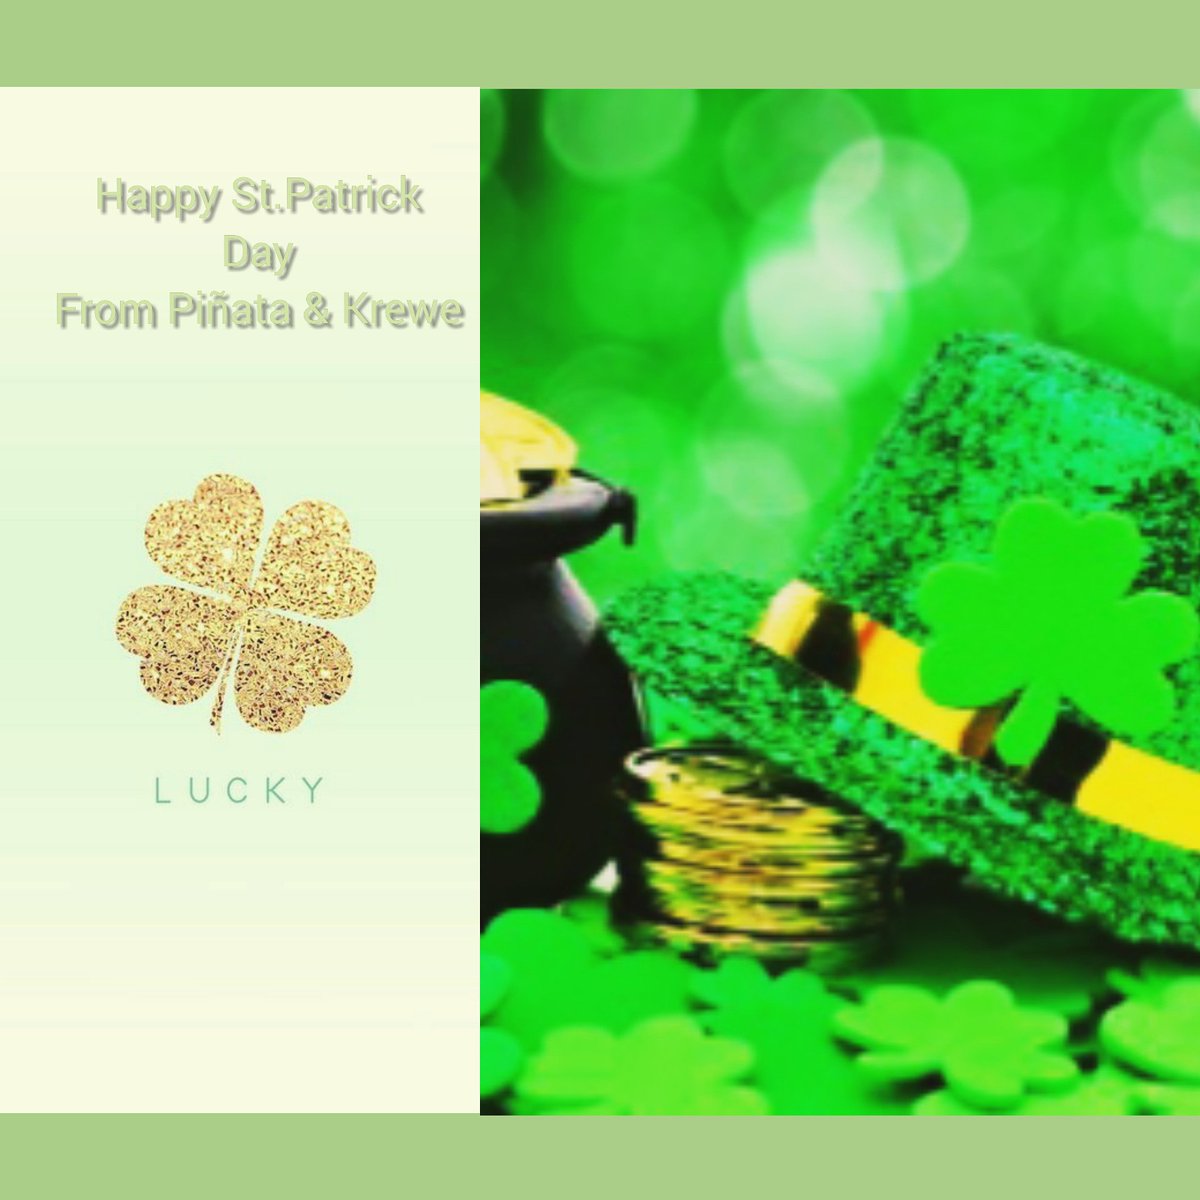 Sprinkling a little green in your life today!
@PinataAndKrewe
#shamrock #stpatricksday #irishday #atlanta #atlantastpatricksdayparade 
#potofgold #stpatrickday2019 #irishbeer 💚🍀